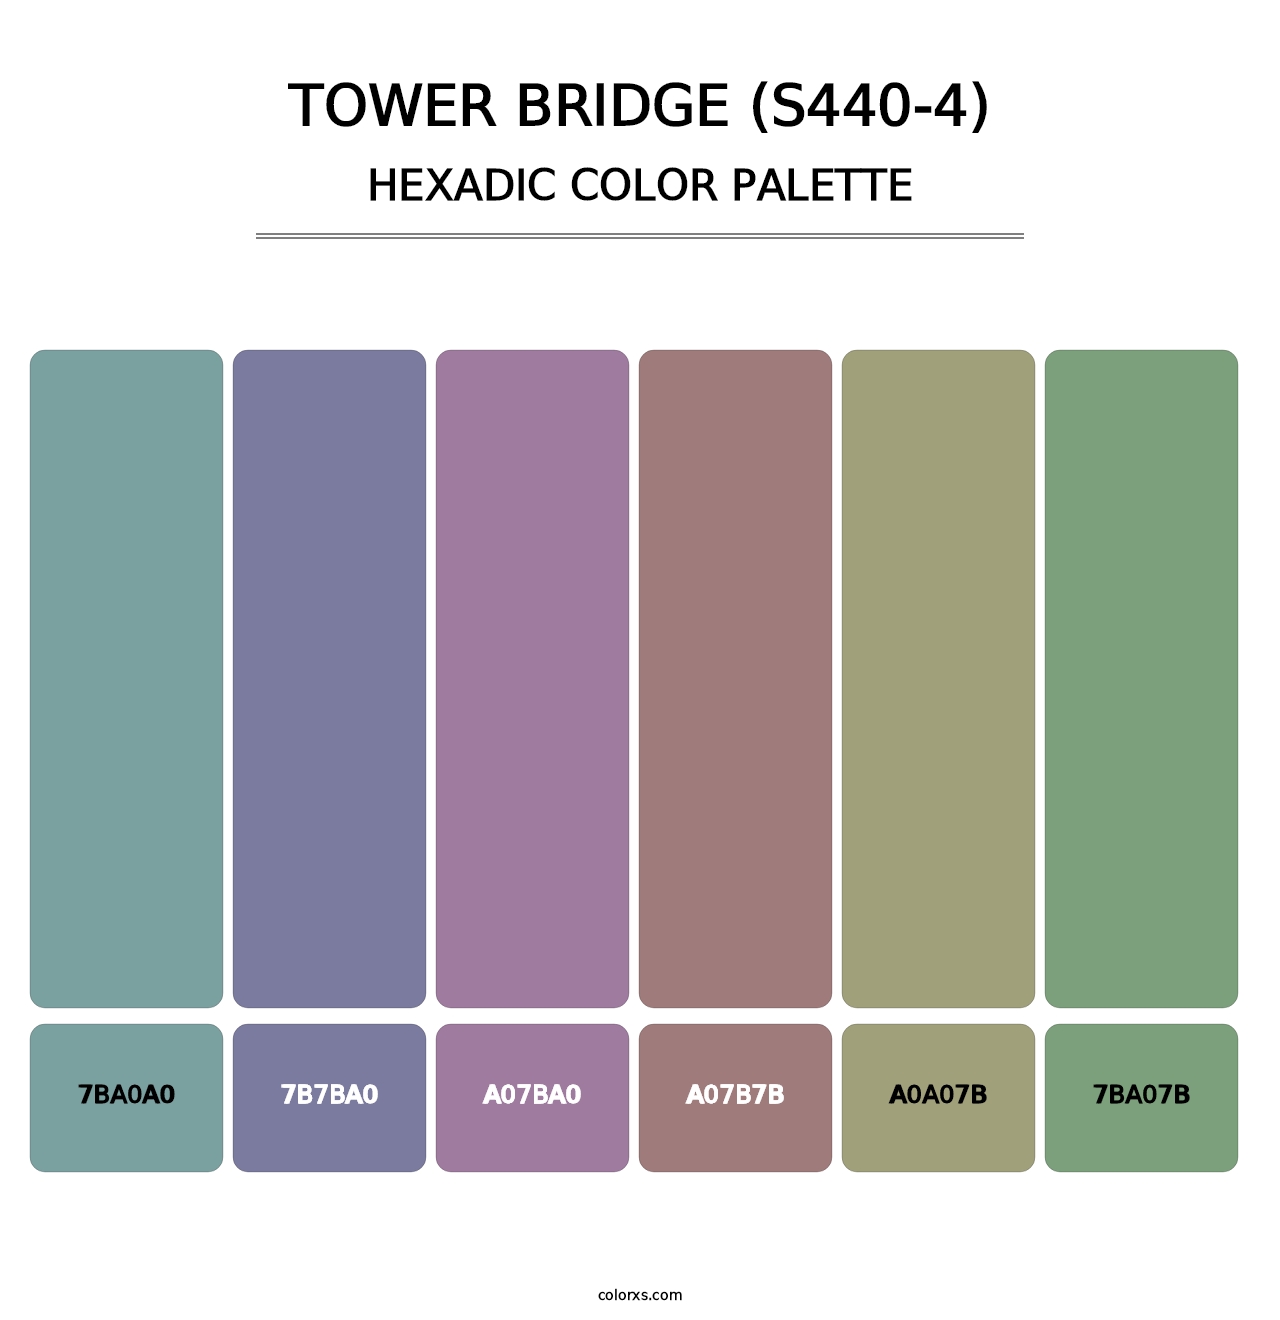 Tower Bridge (S440-4) - Hexadic Color Palette